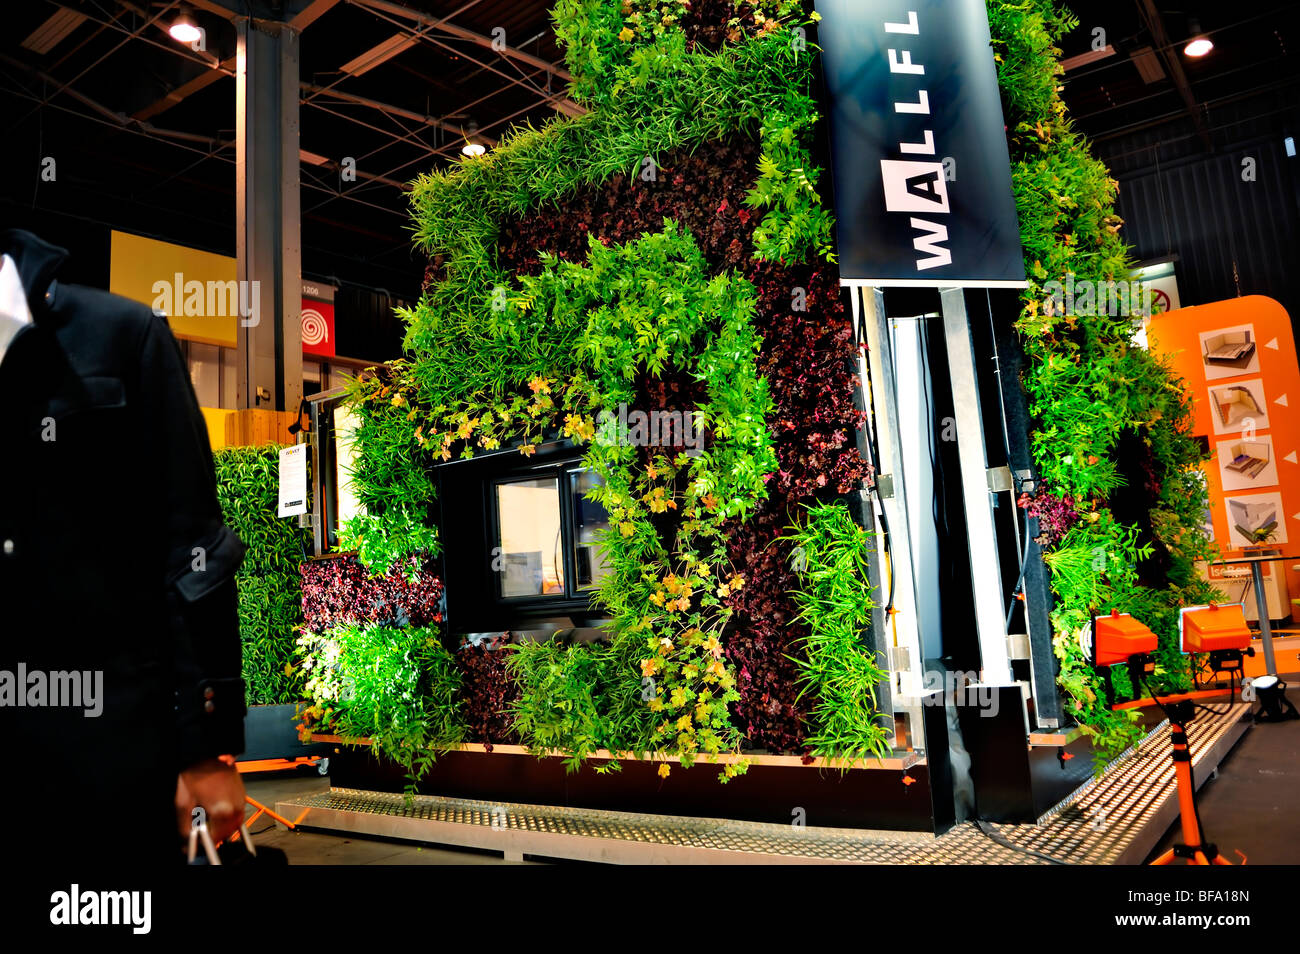 Paris, France, Construction Equipment 'Trade Show', 'Salon Batimat', Vegetal Display, Green Wall Marketing, global green economy concept, vertical Stock Photo